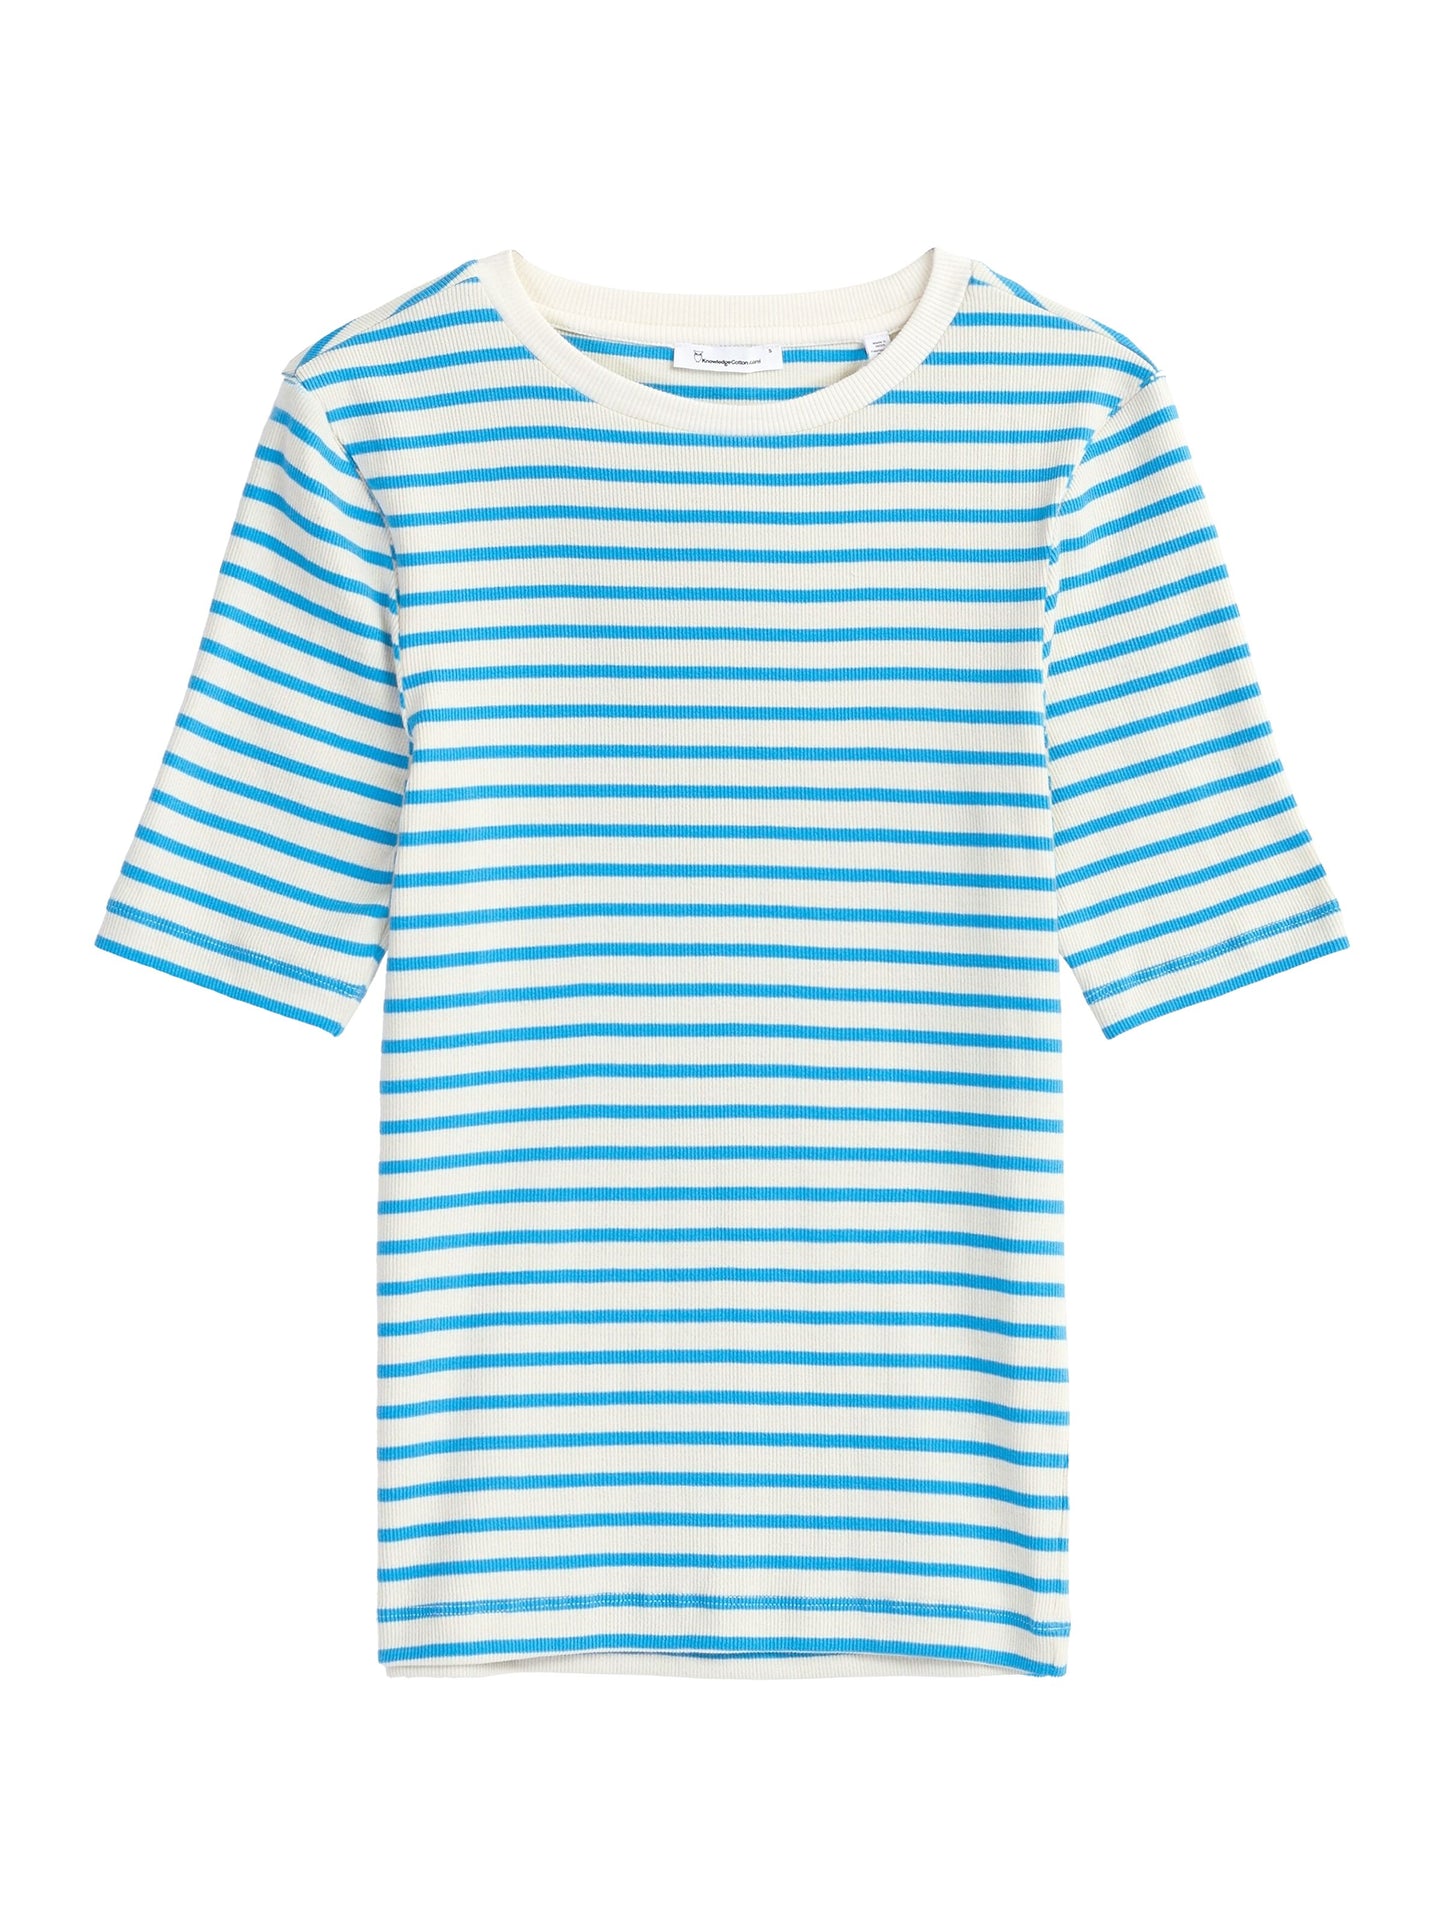 KCA - Striped rib t-shirt Blue stripe